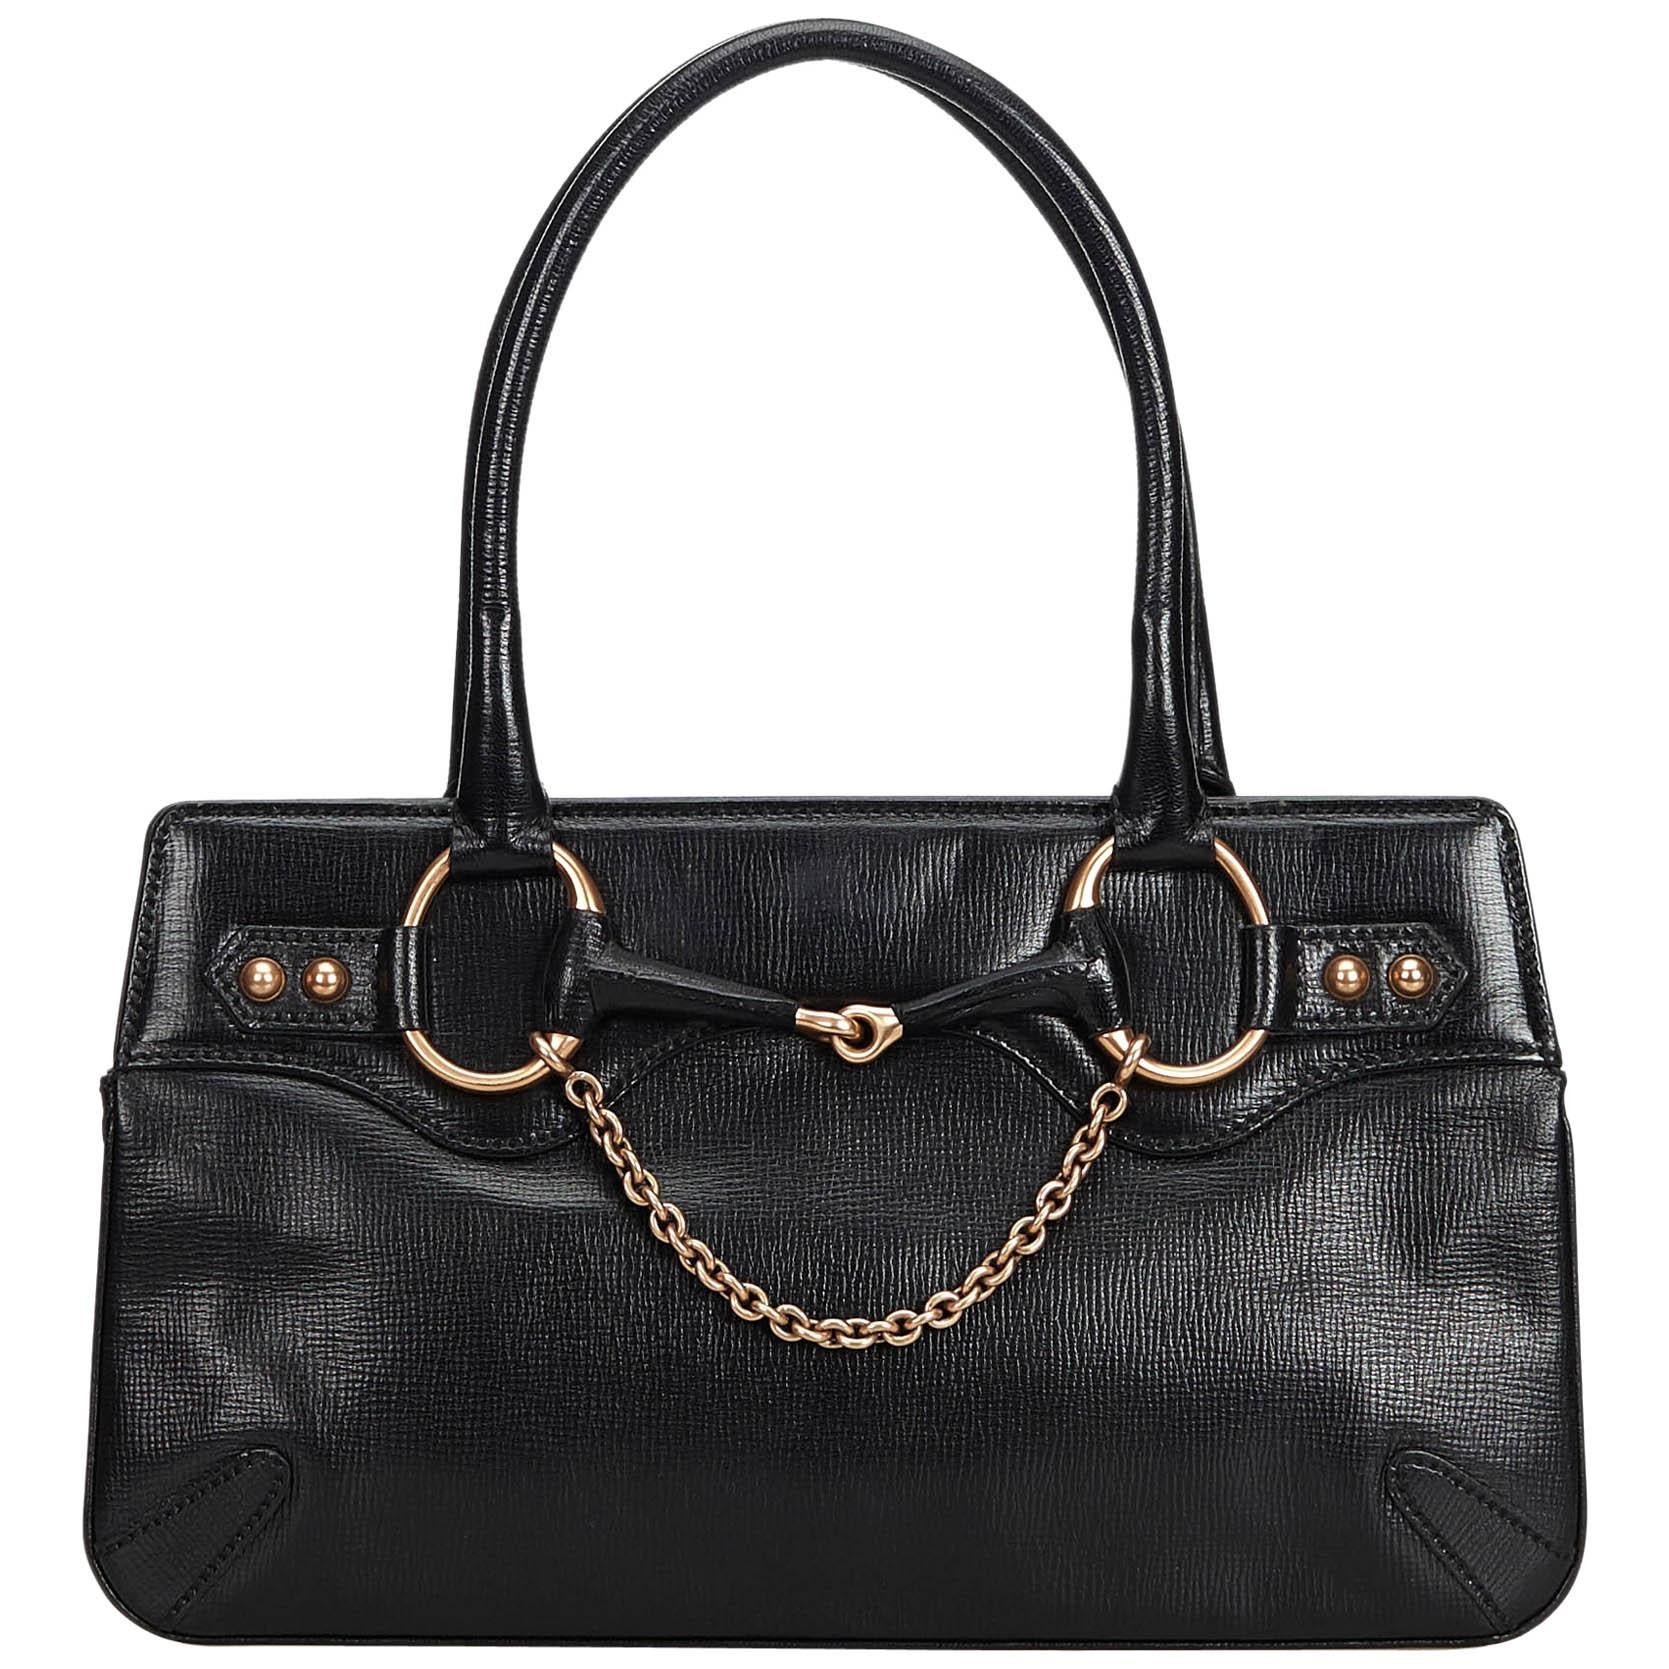 Gucci Black Horsebit Leather Handbag